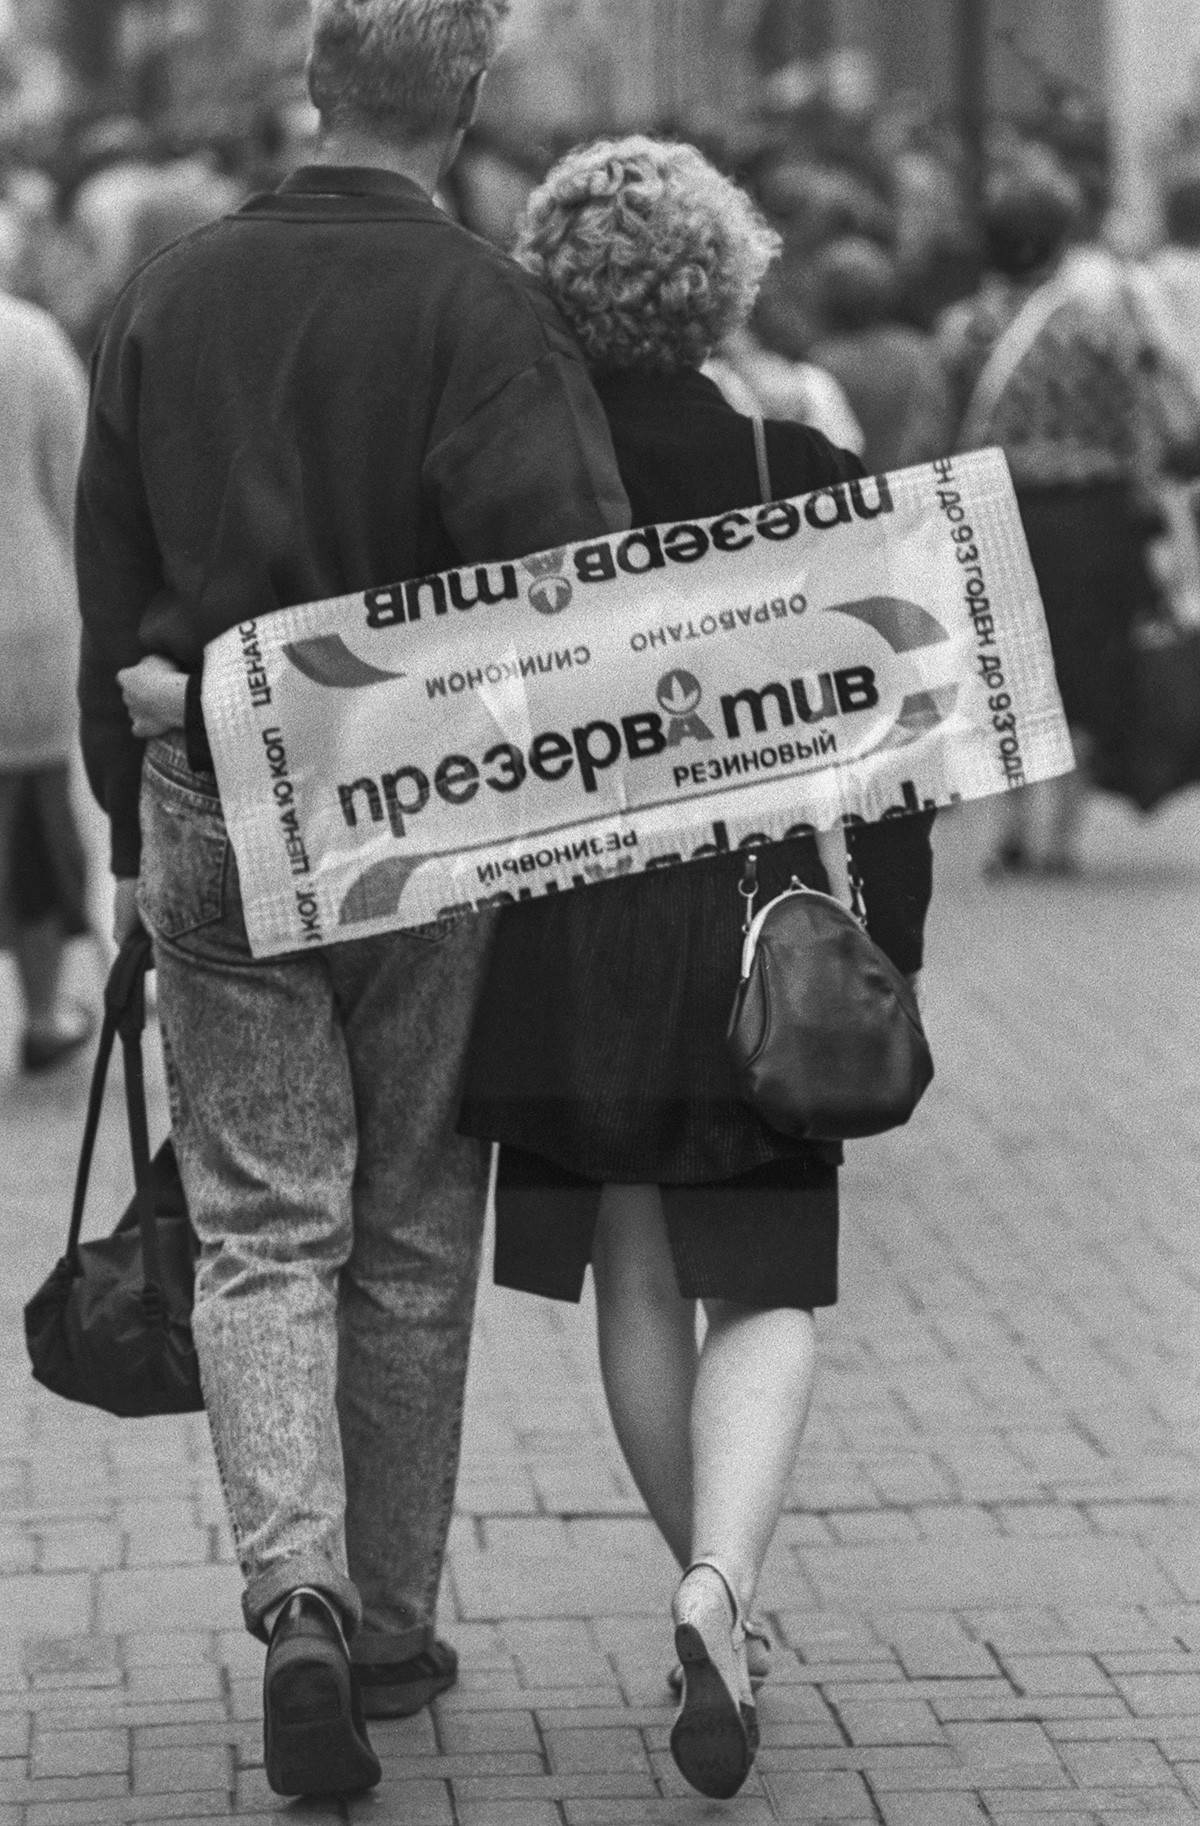 Soviet condoms, 1990.